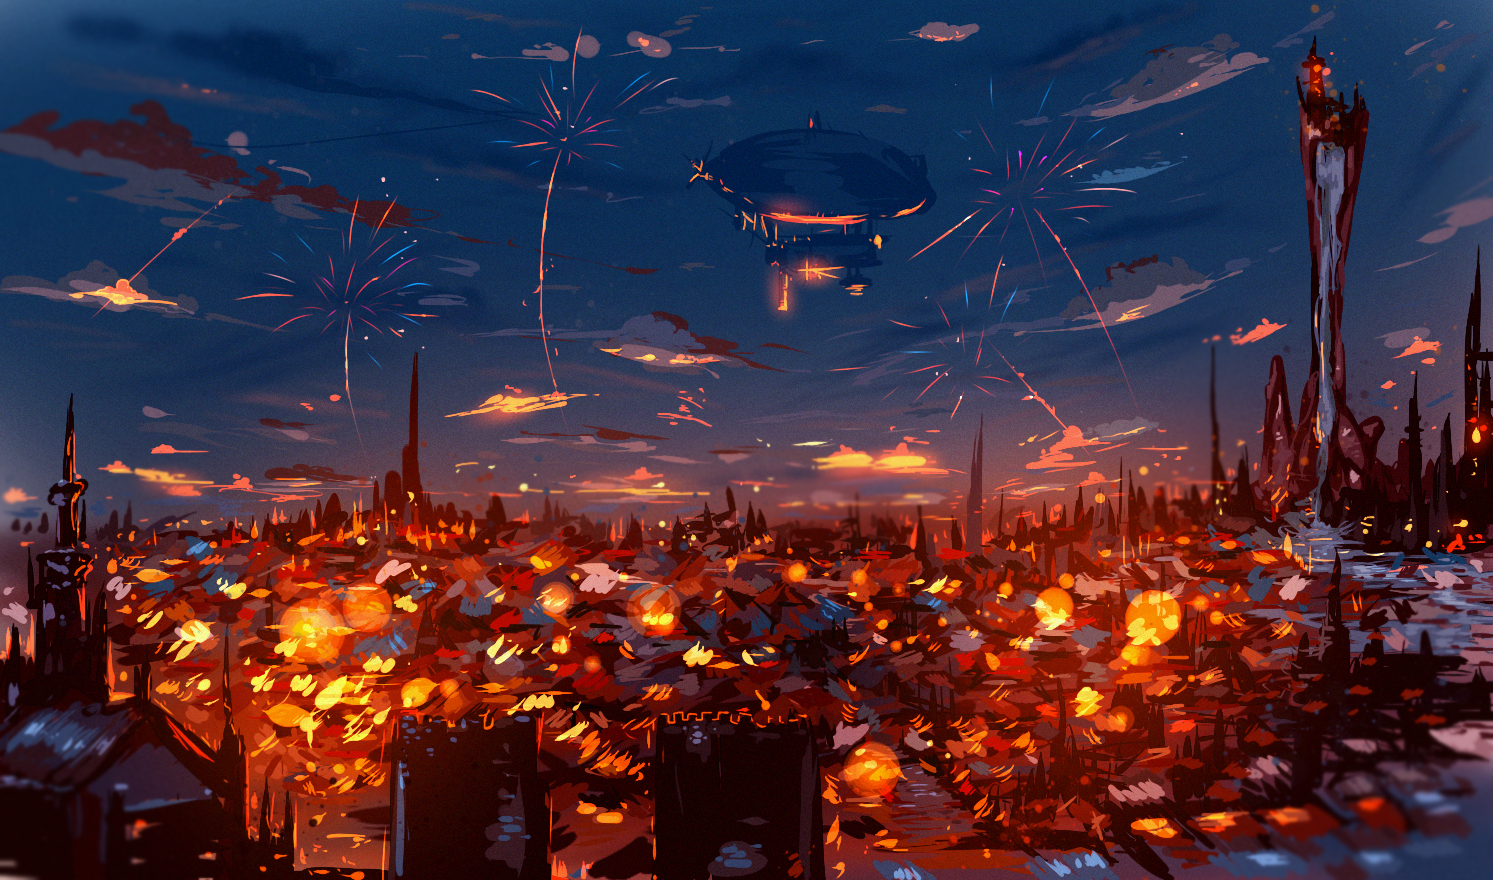 Ryky Painting Digital Art City Fireworks Zeppelin 1493x880